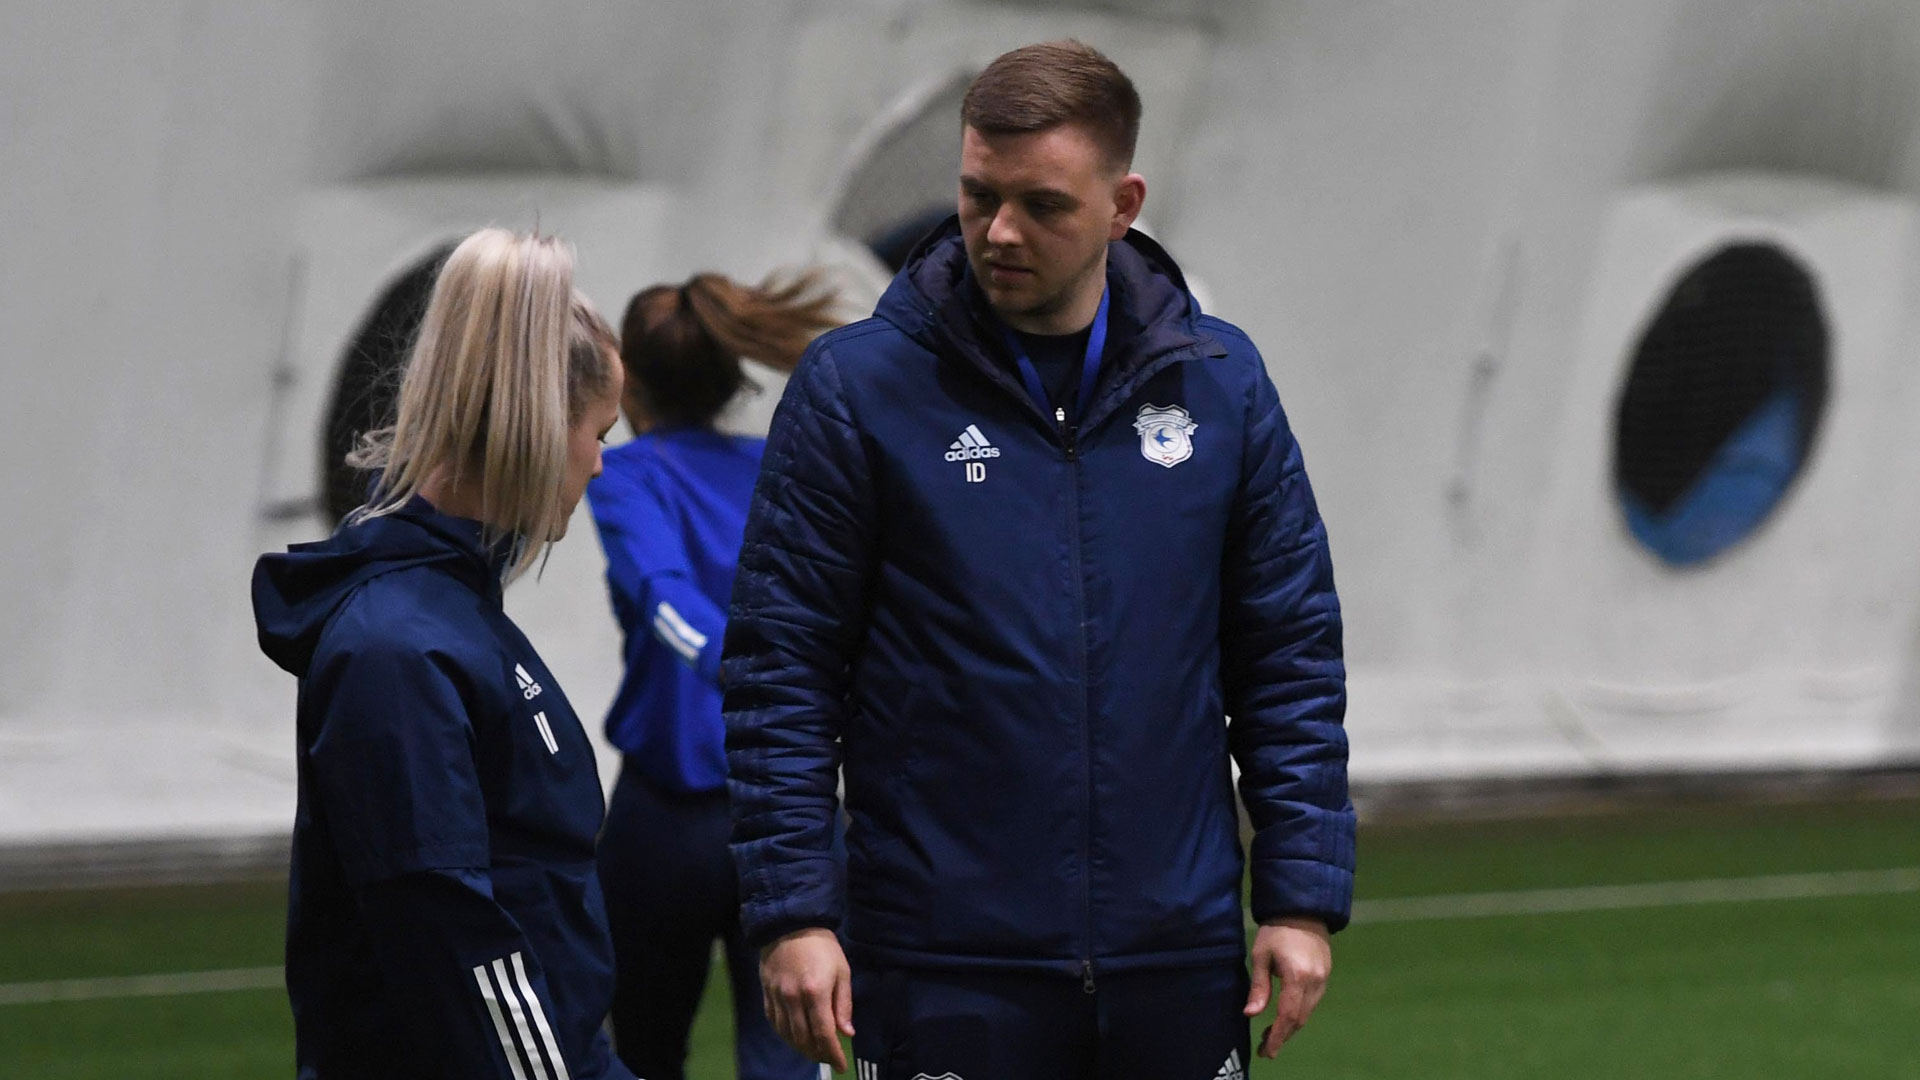 Iain Darbyshire - head coach of Cardiff City FC Women in training...